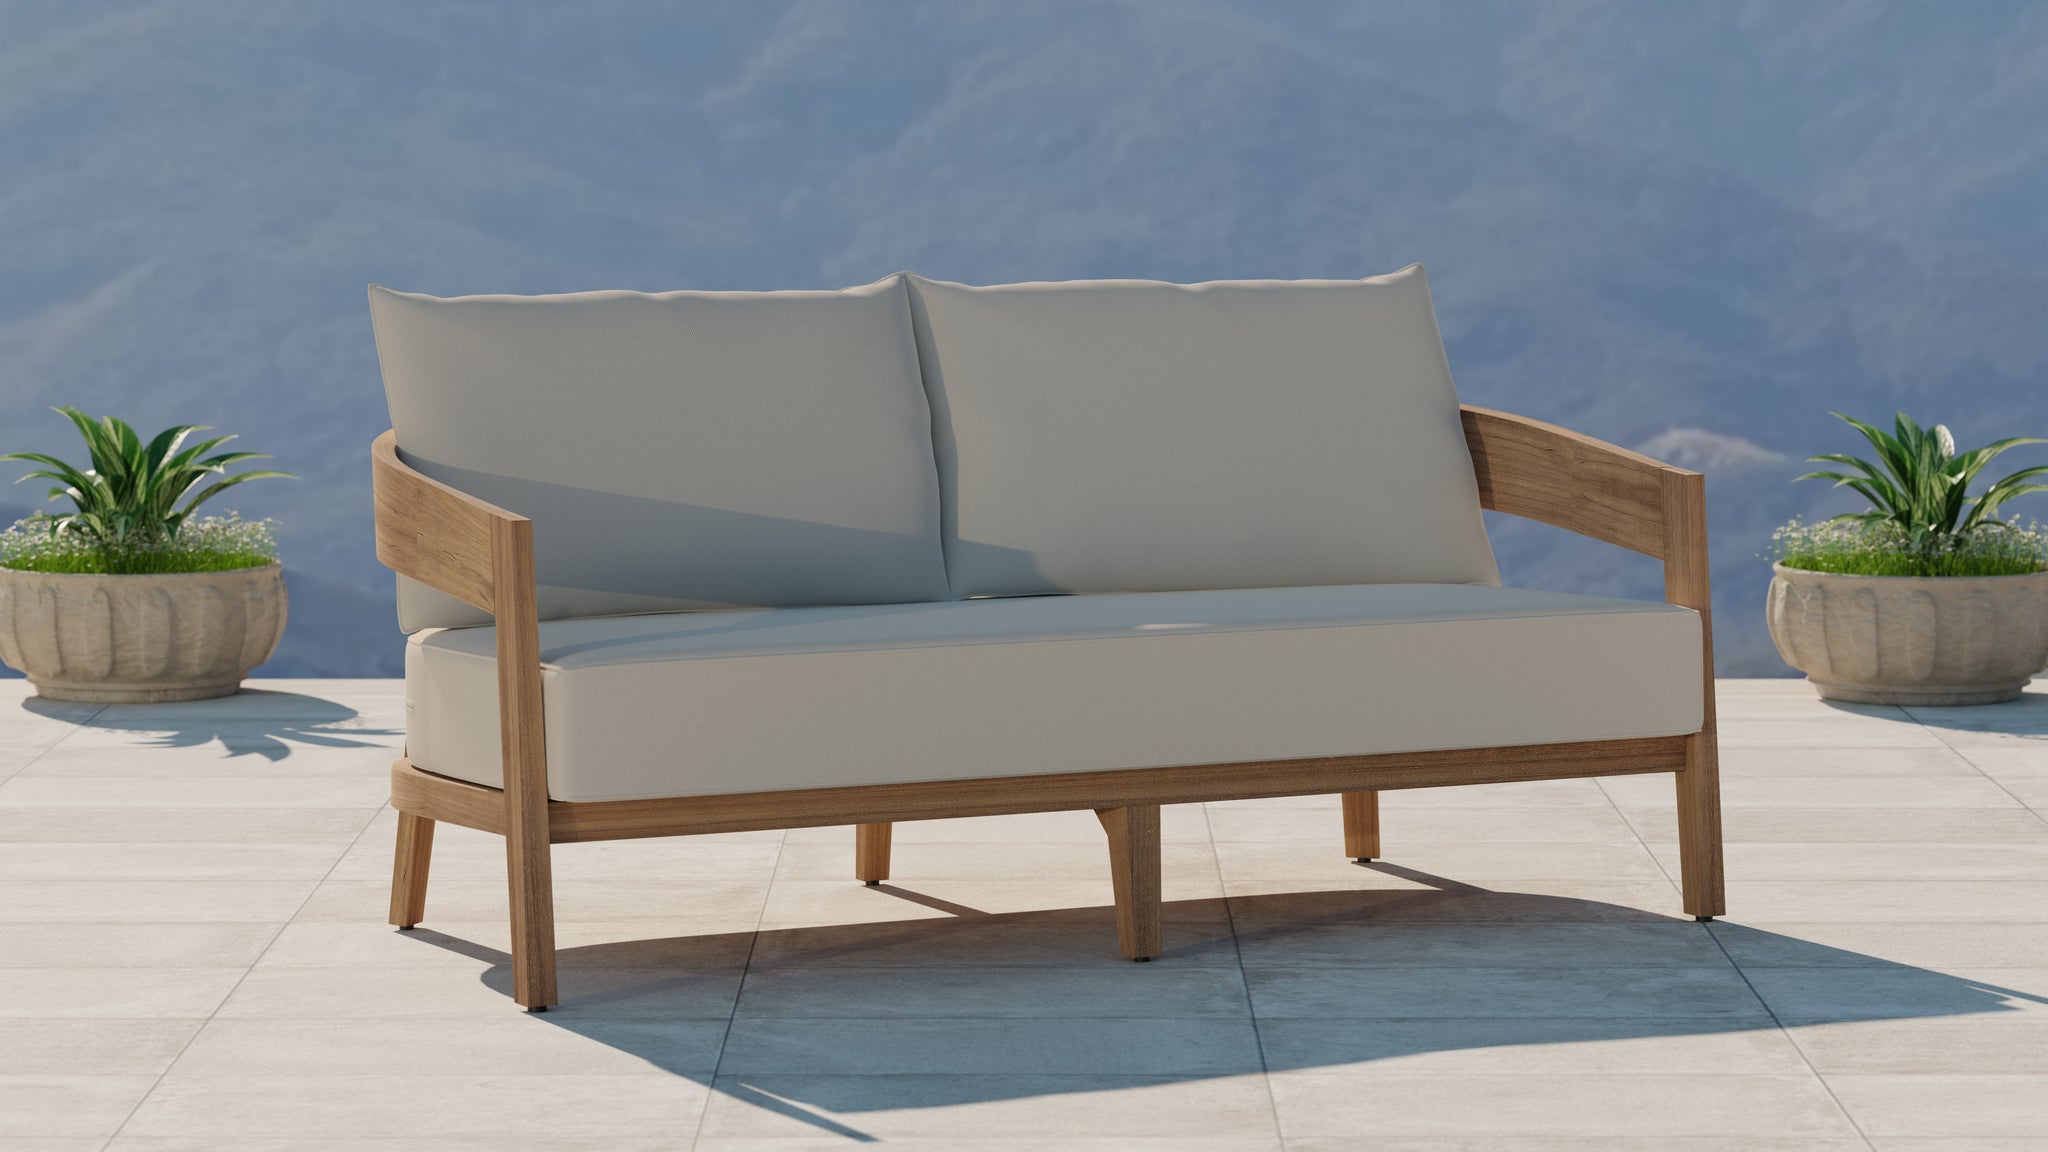 The Windsor Outdoor Teak Lounge Sofa 2 Seater with Ecru Cushions